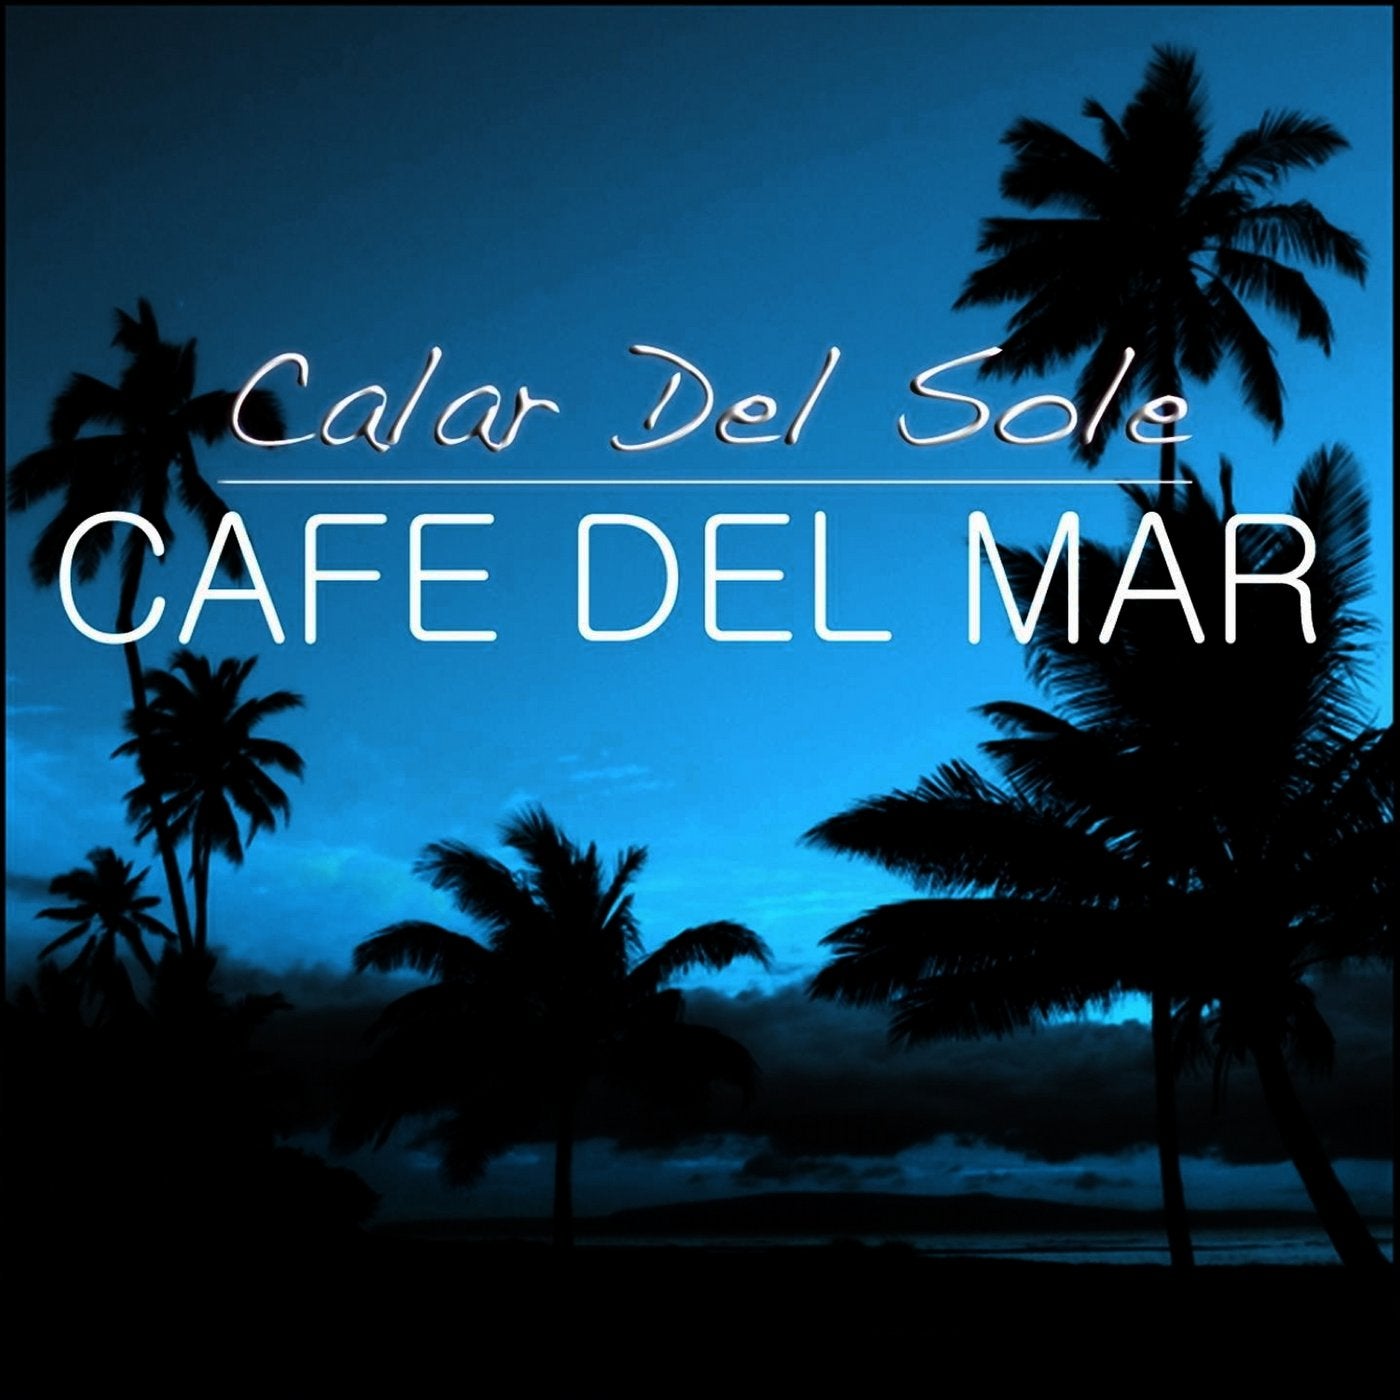 Кафе дельмар. Cafe del Mar кафе. Cafe del Mar обложки.